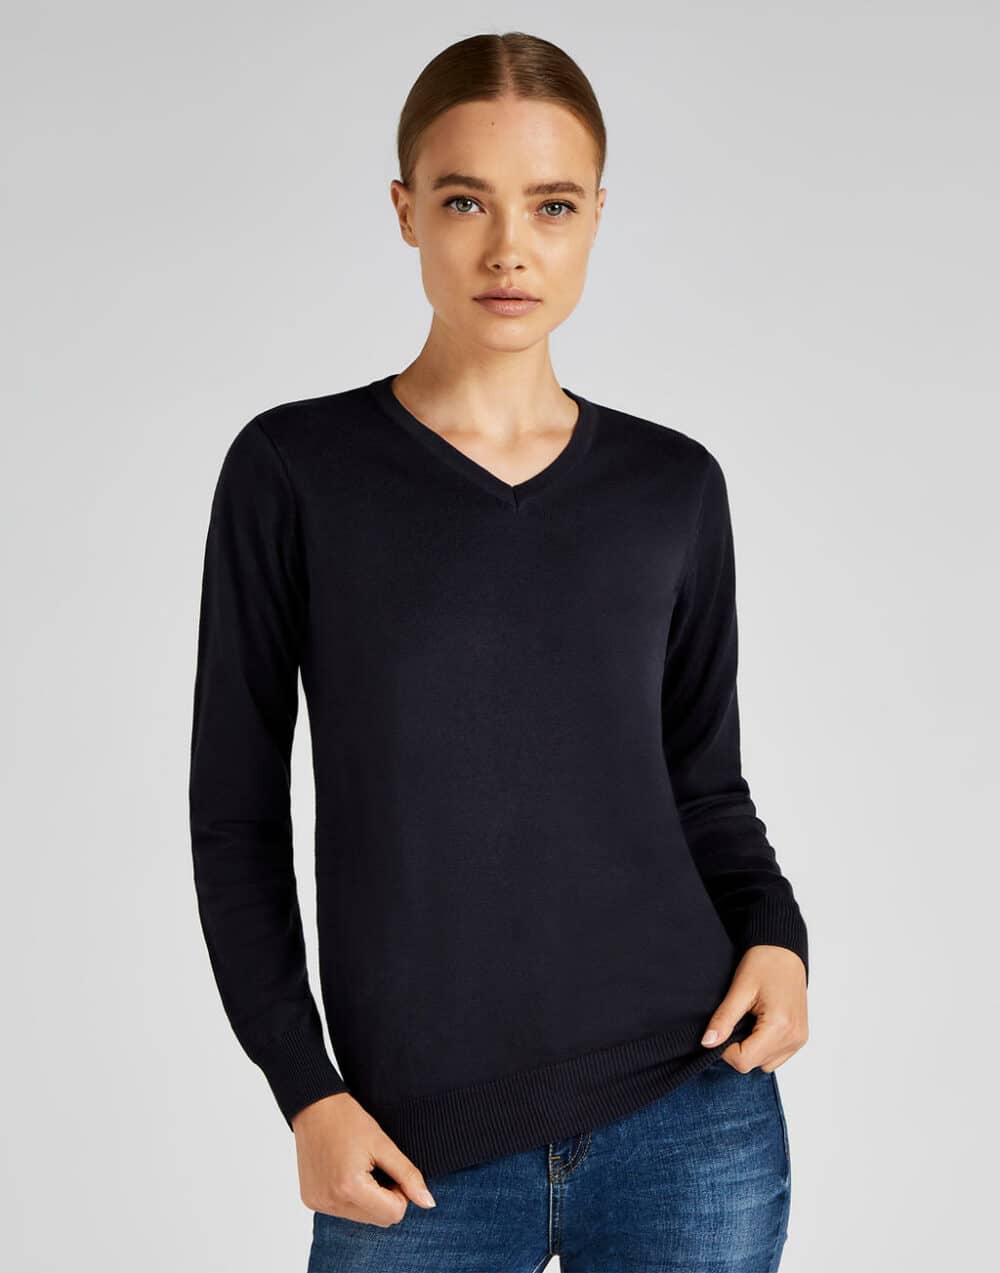 Women`s Classic Fit Arundel Sweater